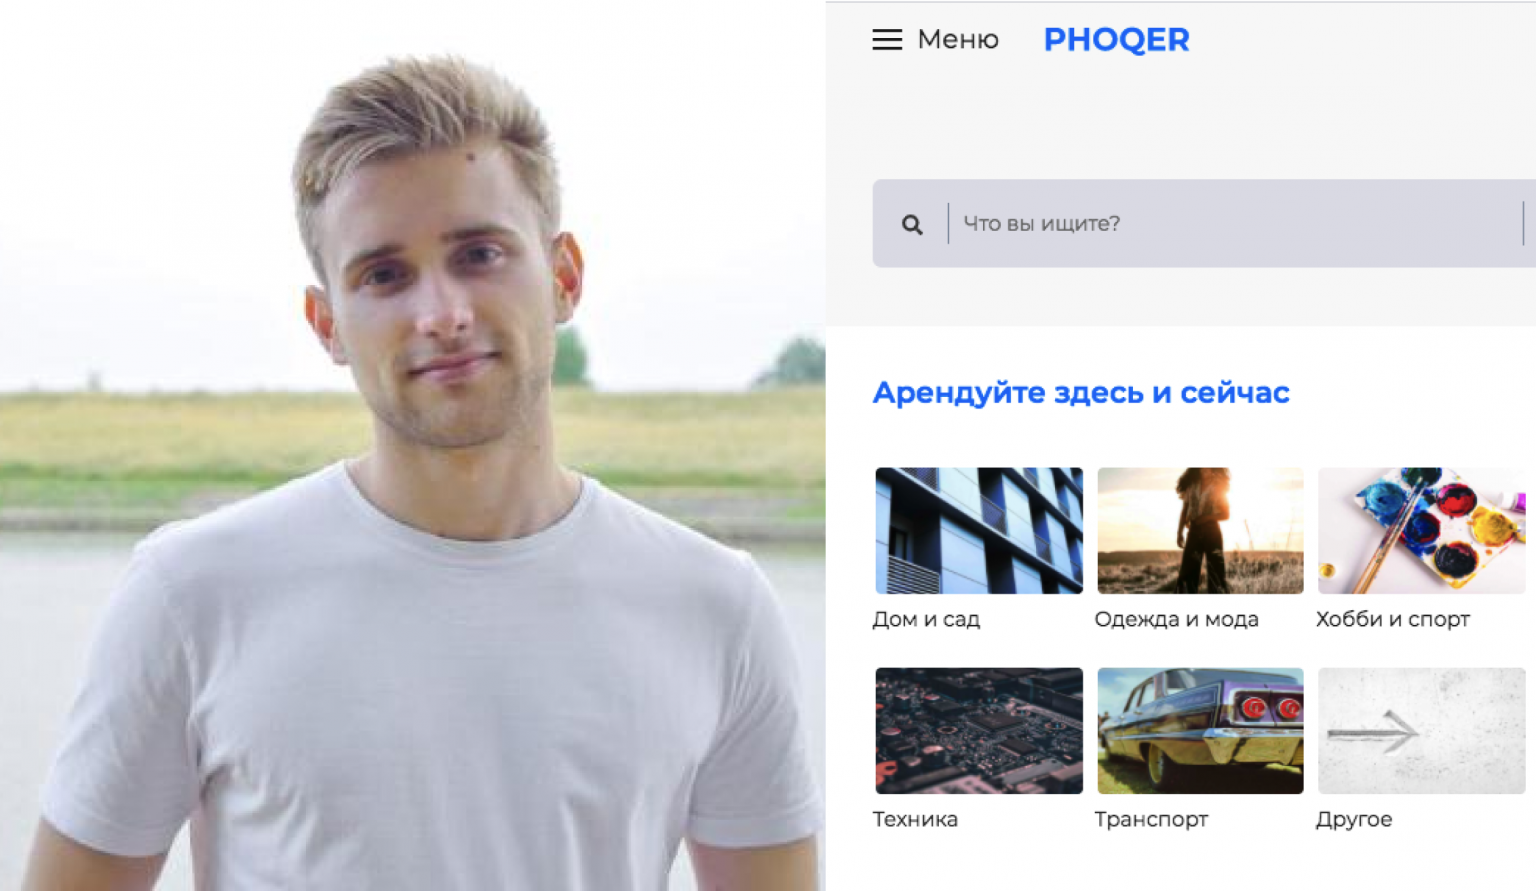 Phoqer — маркетплейс для аренды вещей